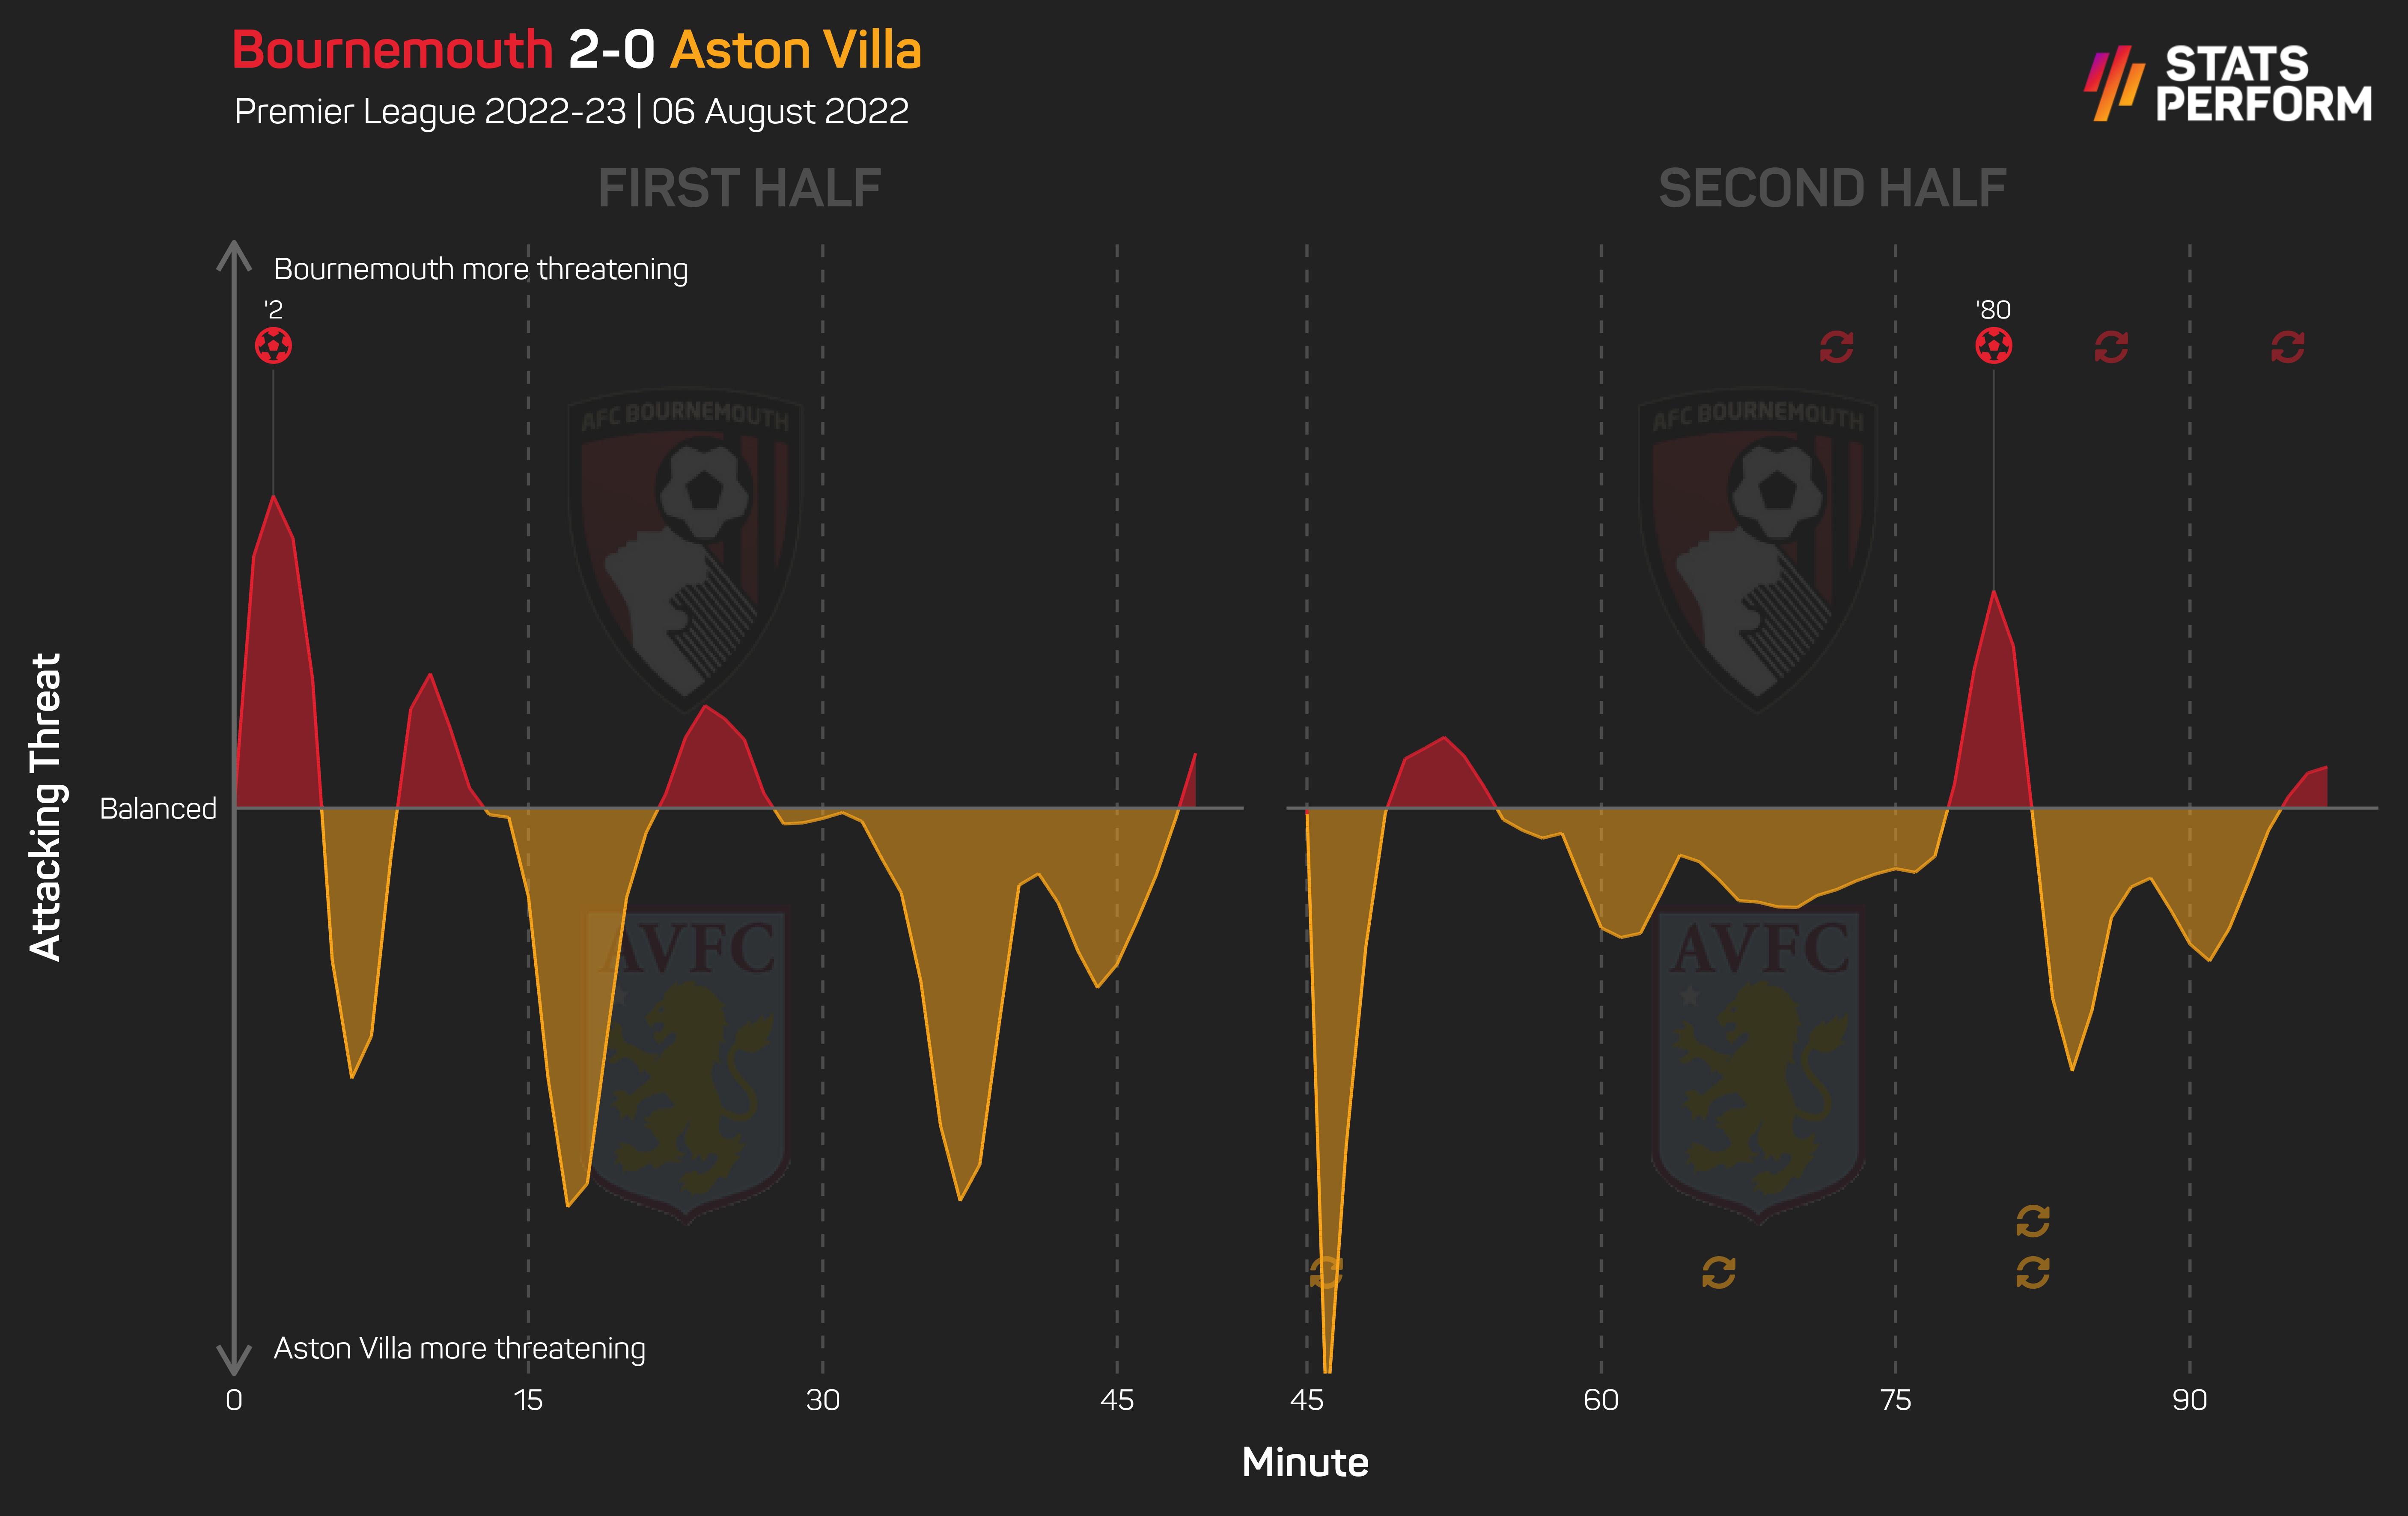 Bournemouth 2-0 Aston Villa momentum